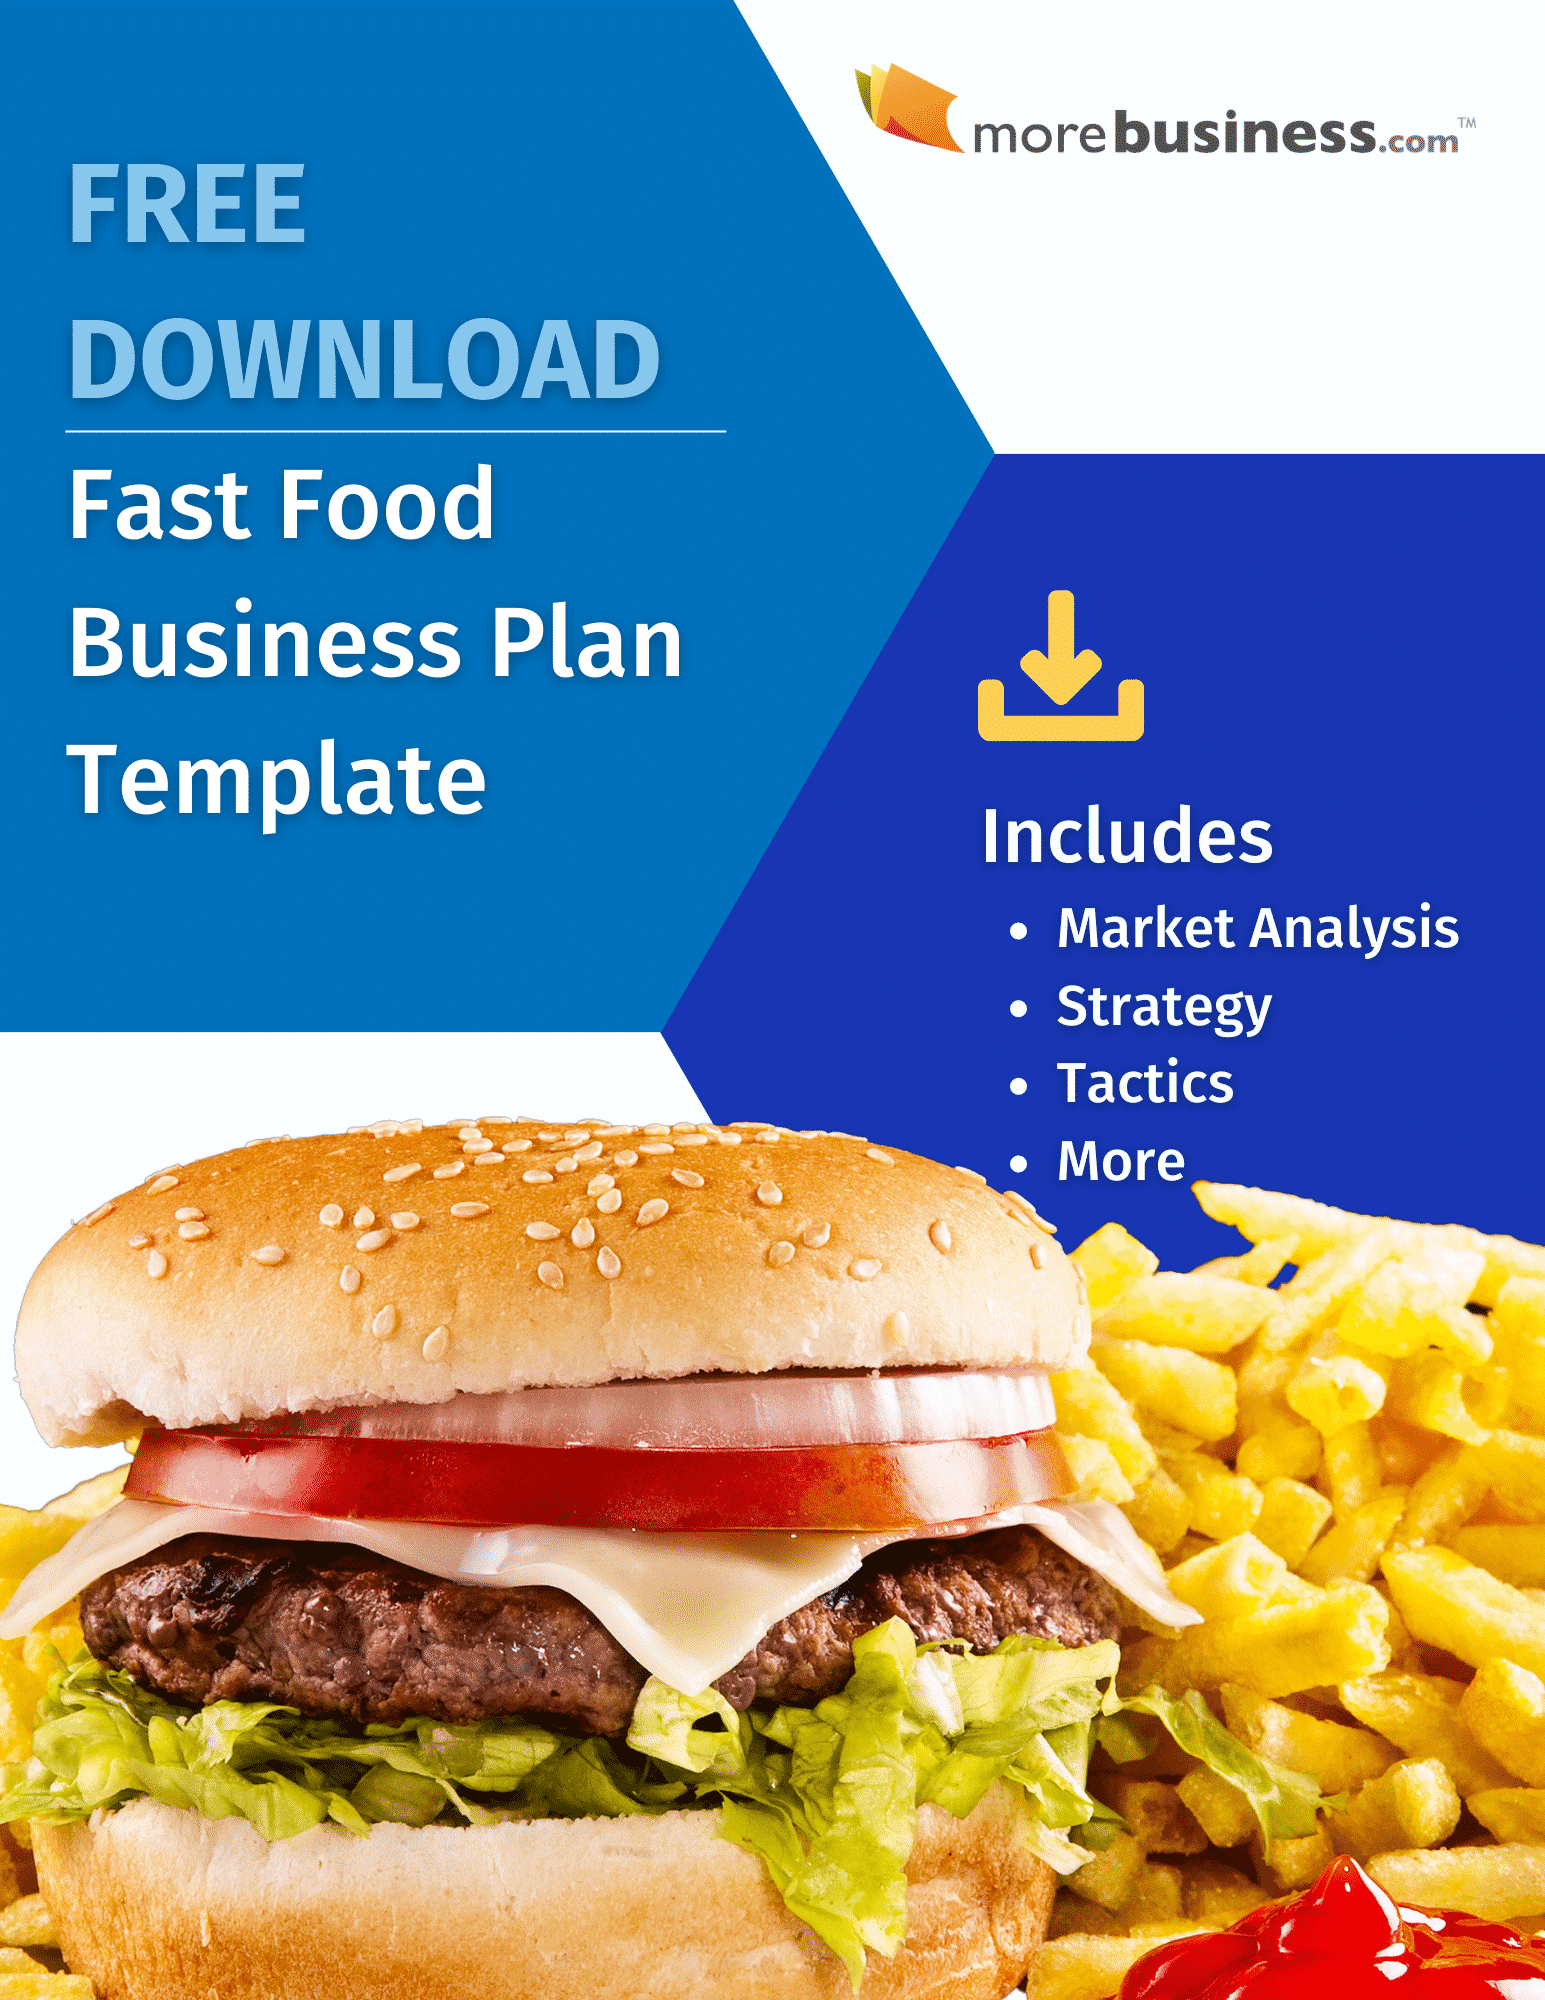 Fast Food Restaurant Business Plan  MoreBusiness.com Throughout Why Write A Restaurant Enterprise Plan